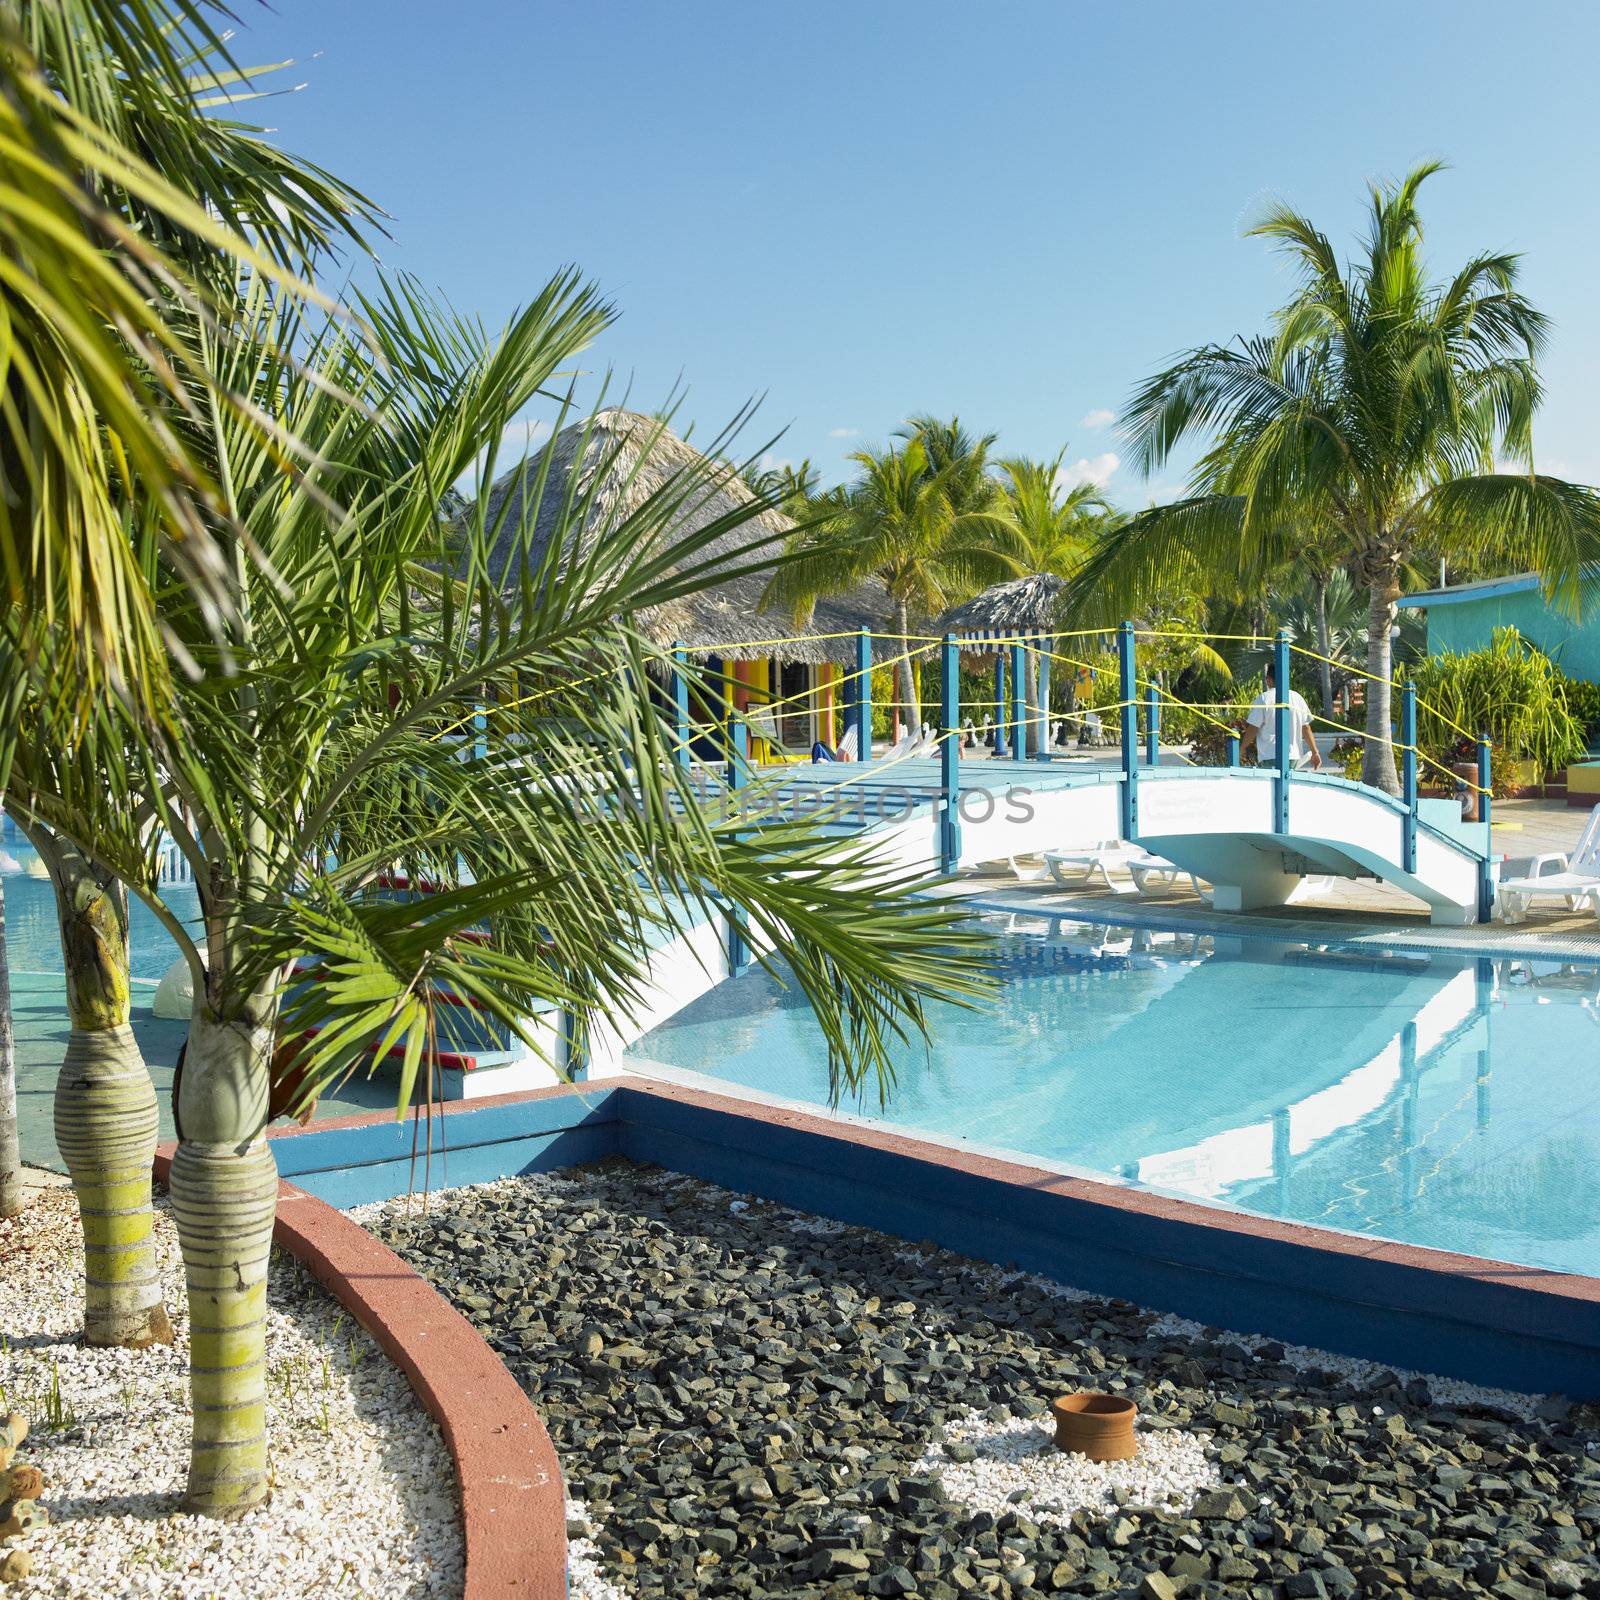 hotel's swimming pool, Cayo Coco, Cuba by phbcz